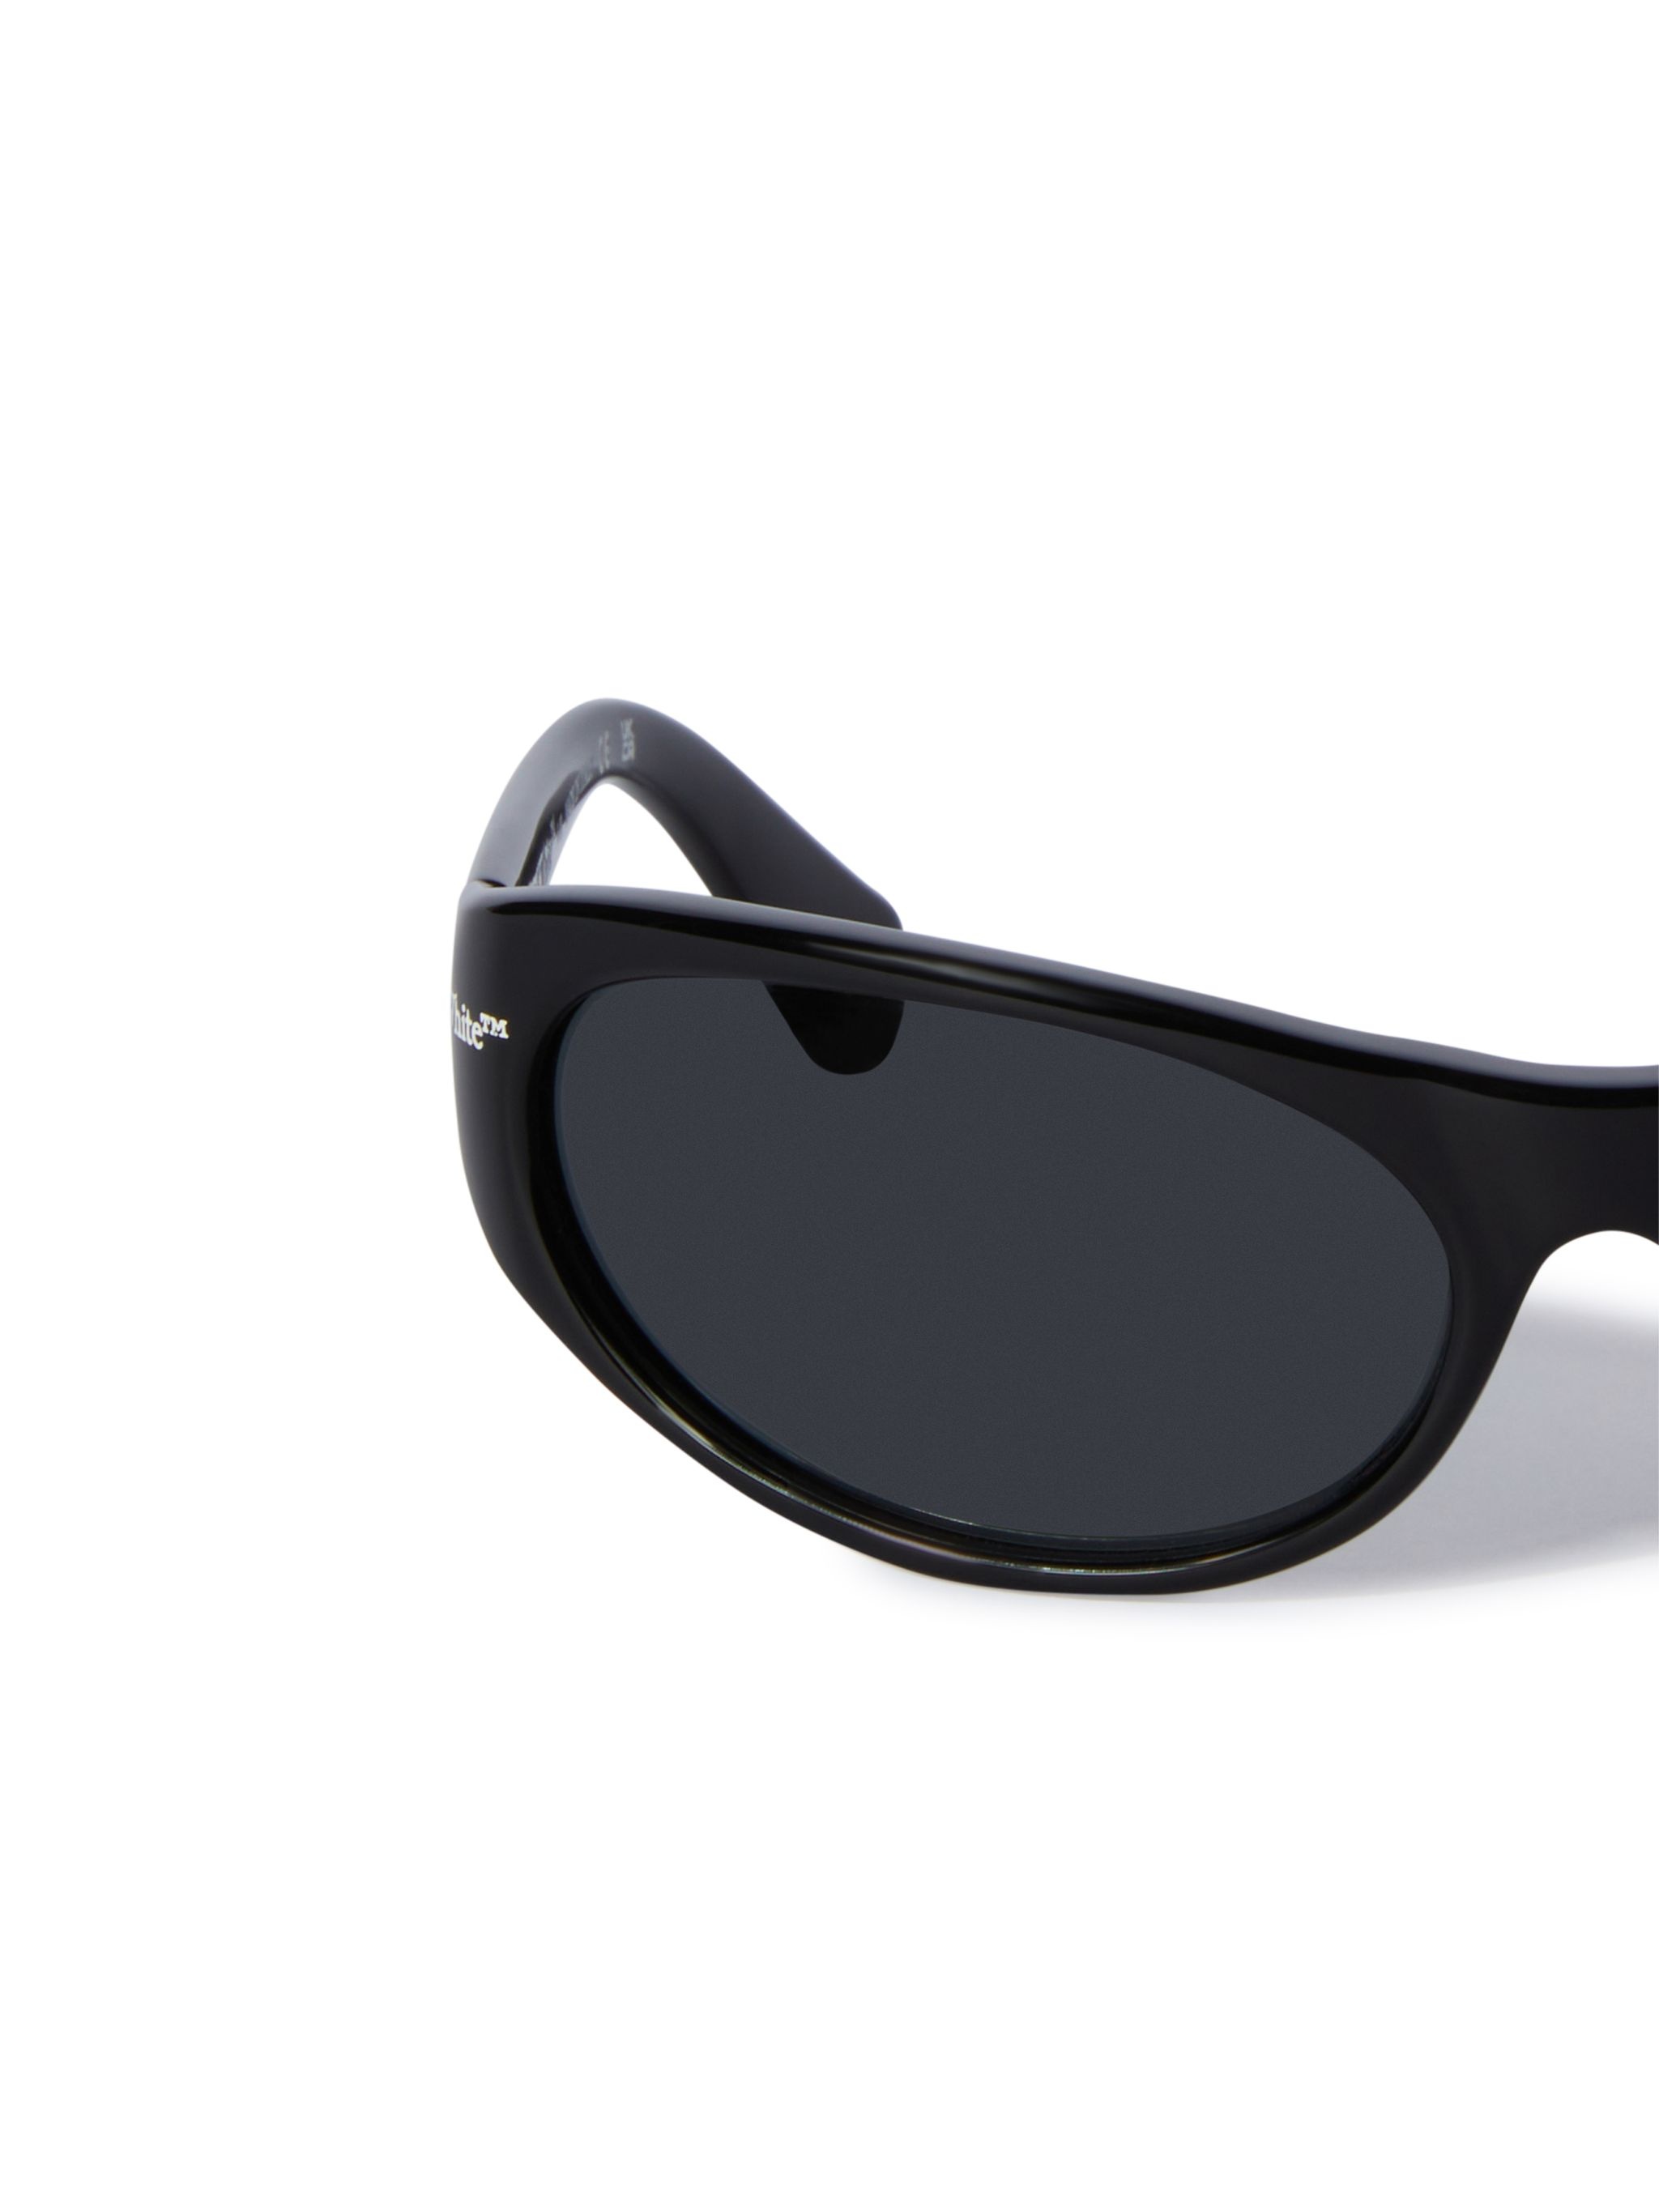 Napoli Sunglasses - 3